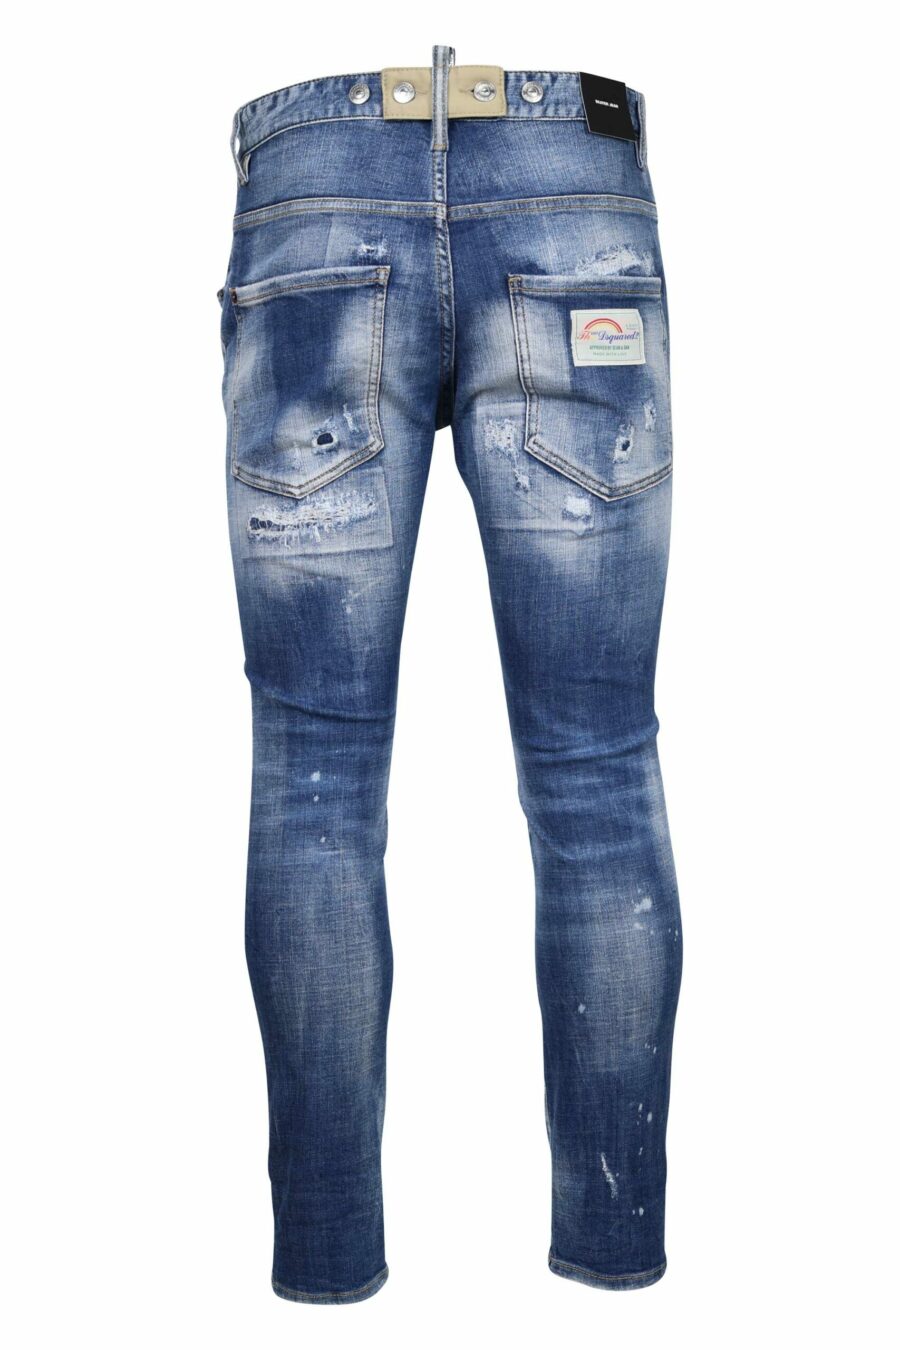 Pantalón vaquero azul claro "skater jean" con rotos y desgastado - 8054148338848 2 scaled